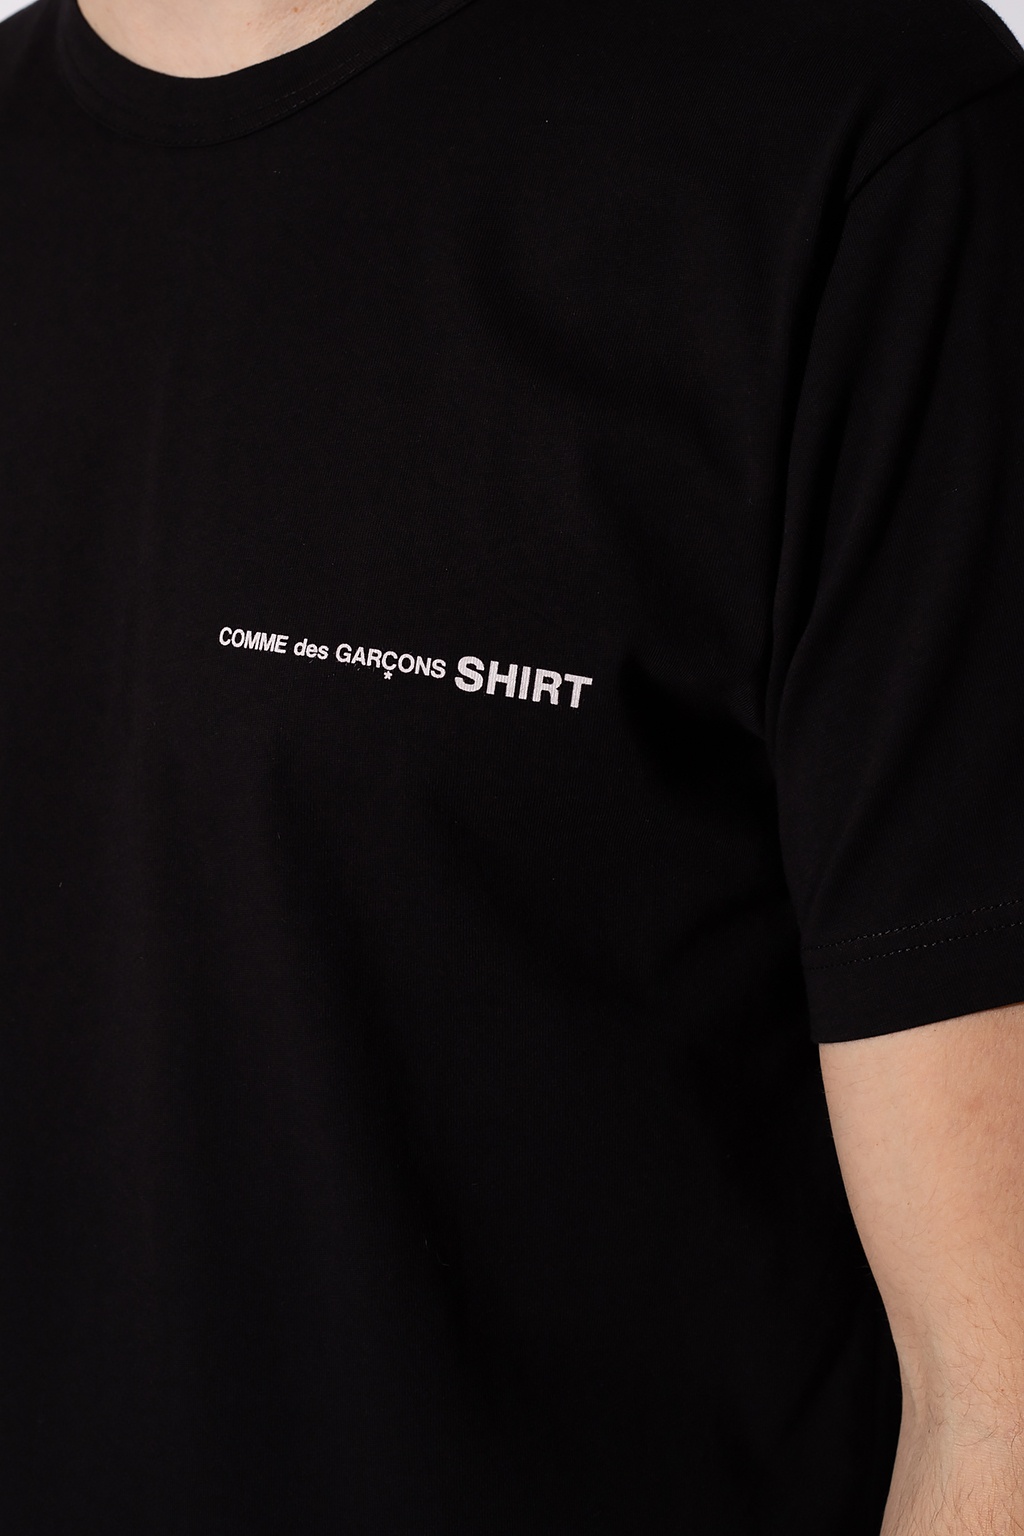 Comme des Garcons Shirt T-shirt with logo